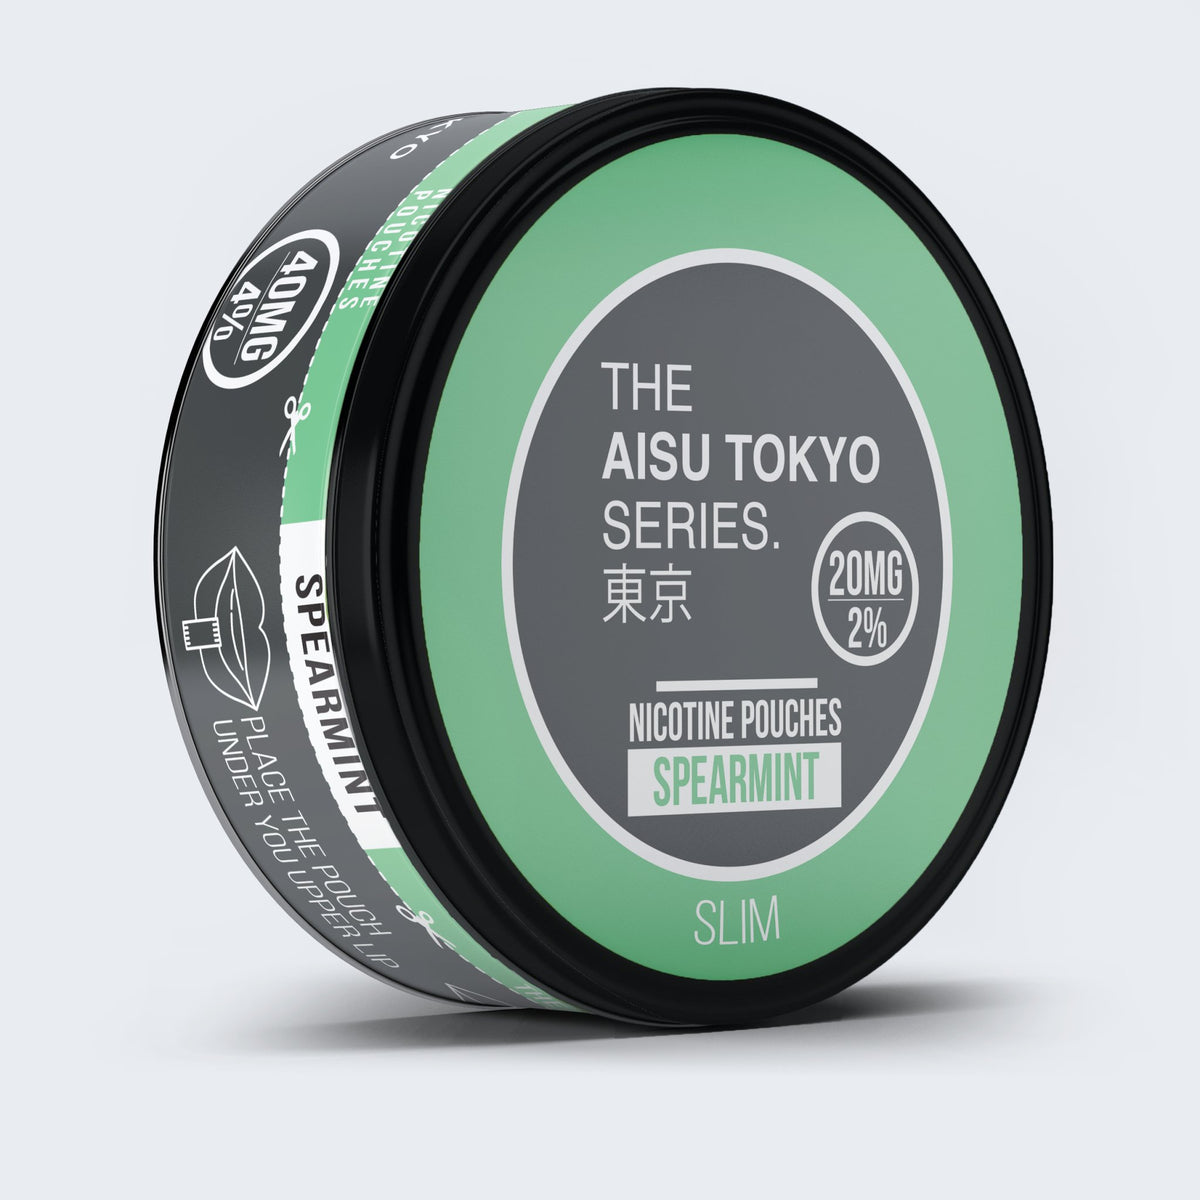 The Aisu Tokyo Series Snus/Nicotine Pouches - VapeBoo